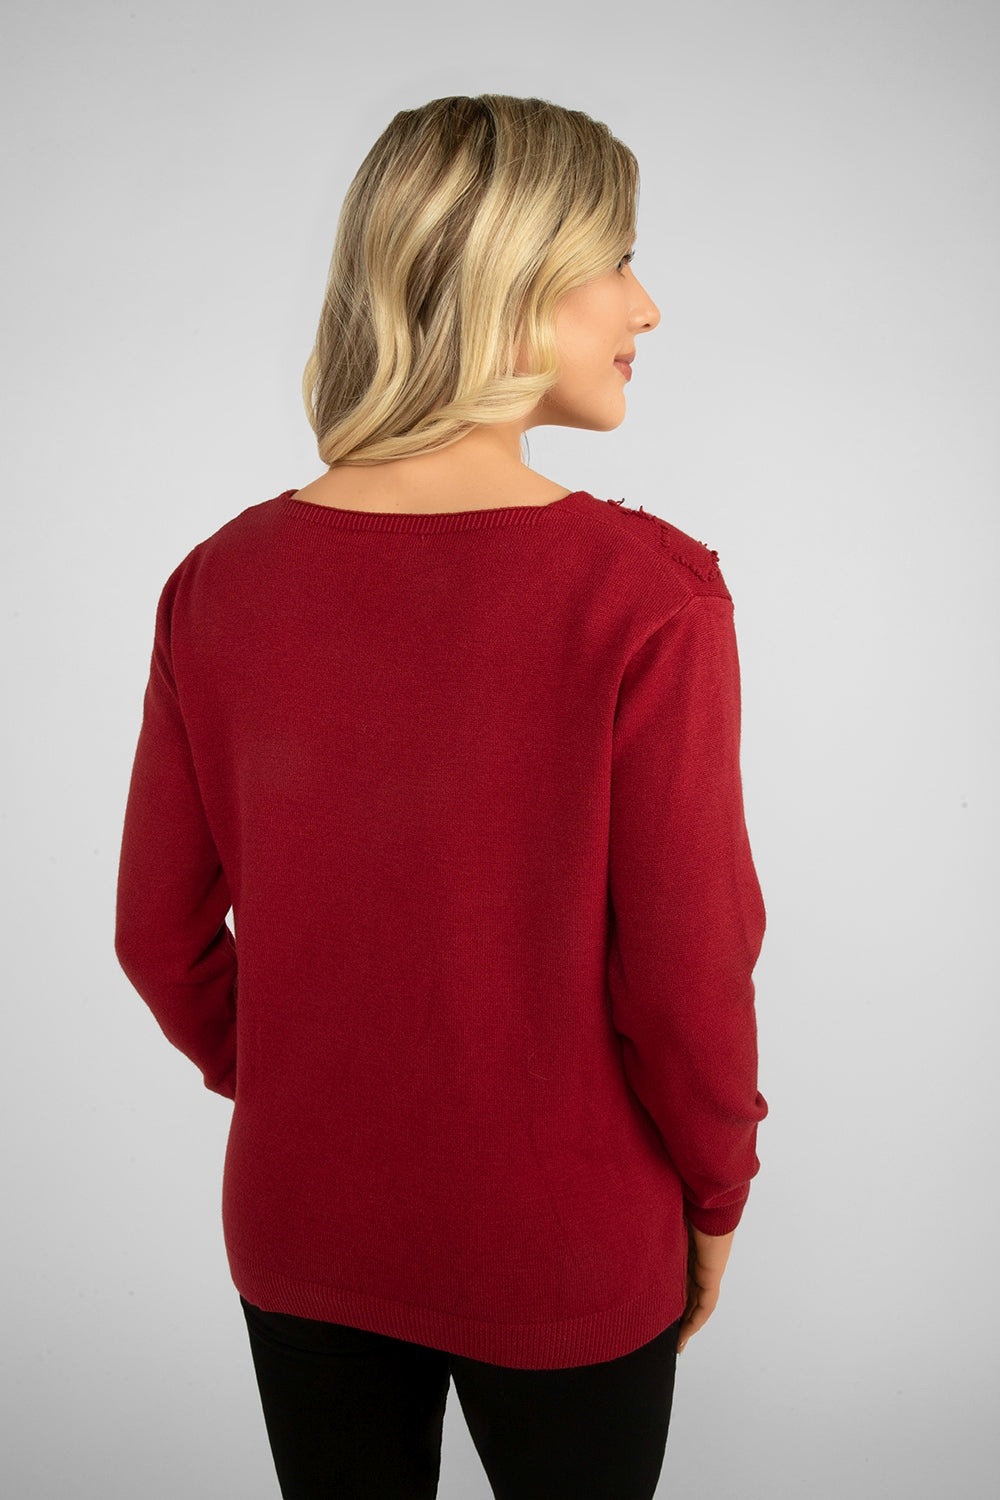 Women's Clothing FEMME FATALE (W-64VSW) Stitched Heart Sweater in WINE